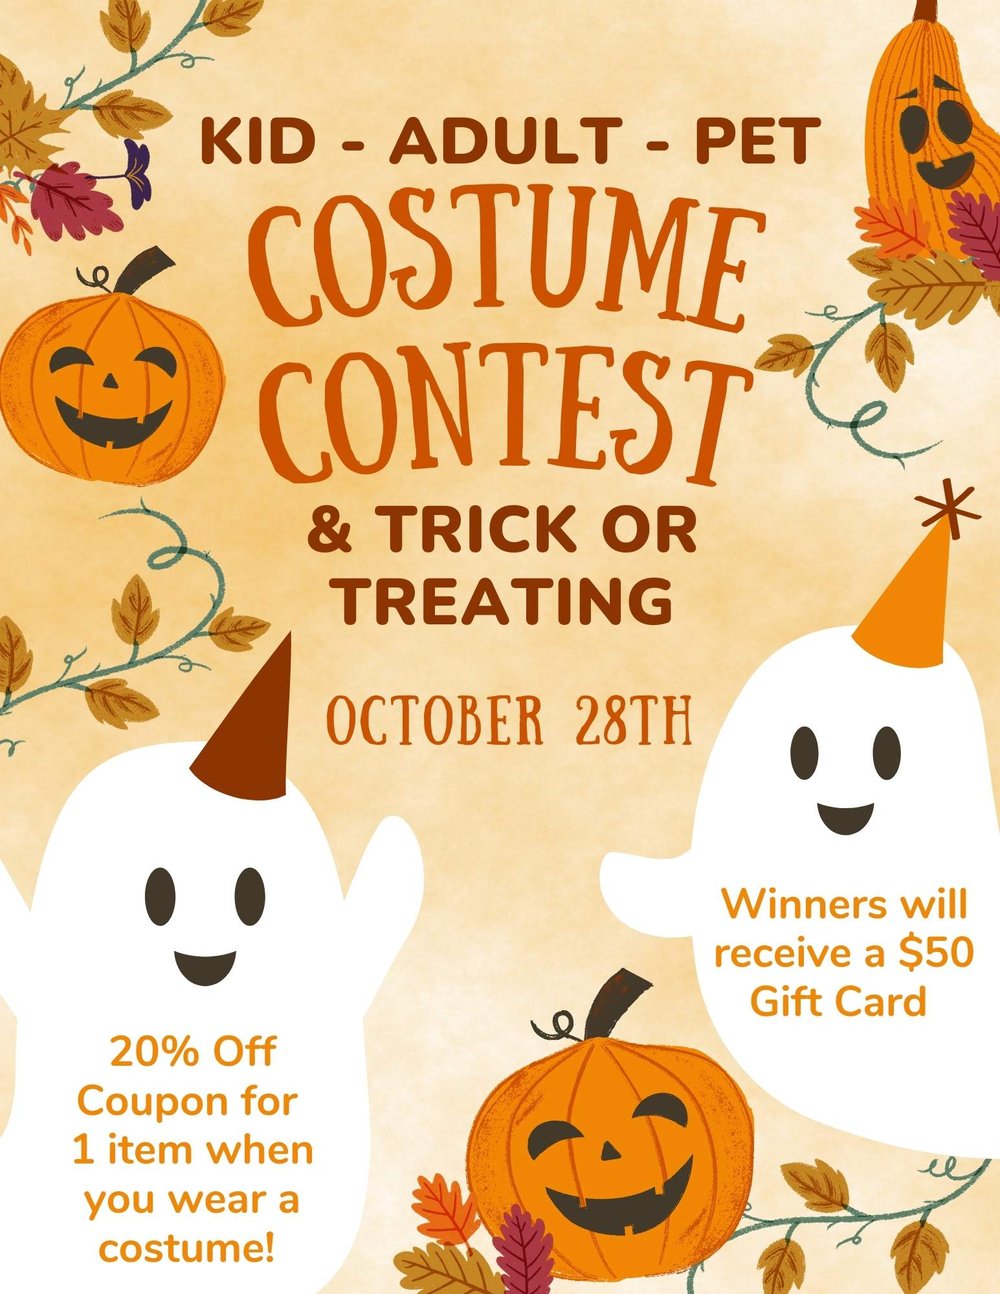 Costume Contest & Trick or Treating! — Logan's Garden Shop